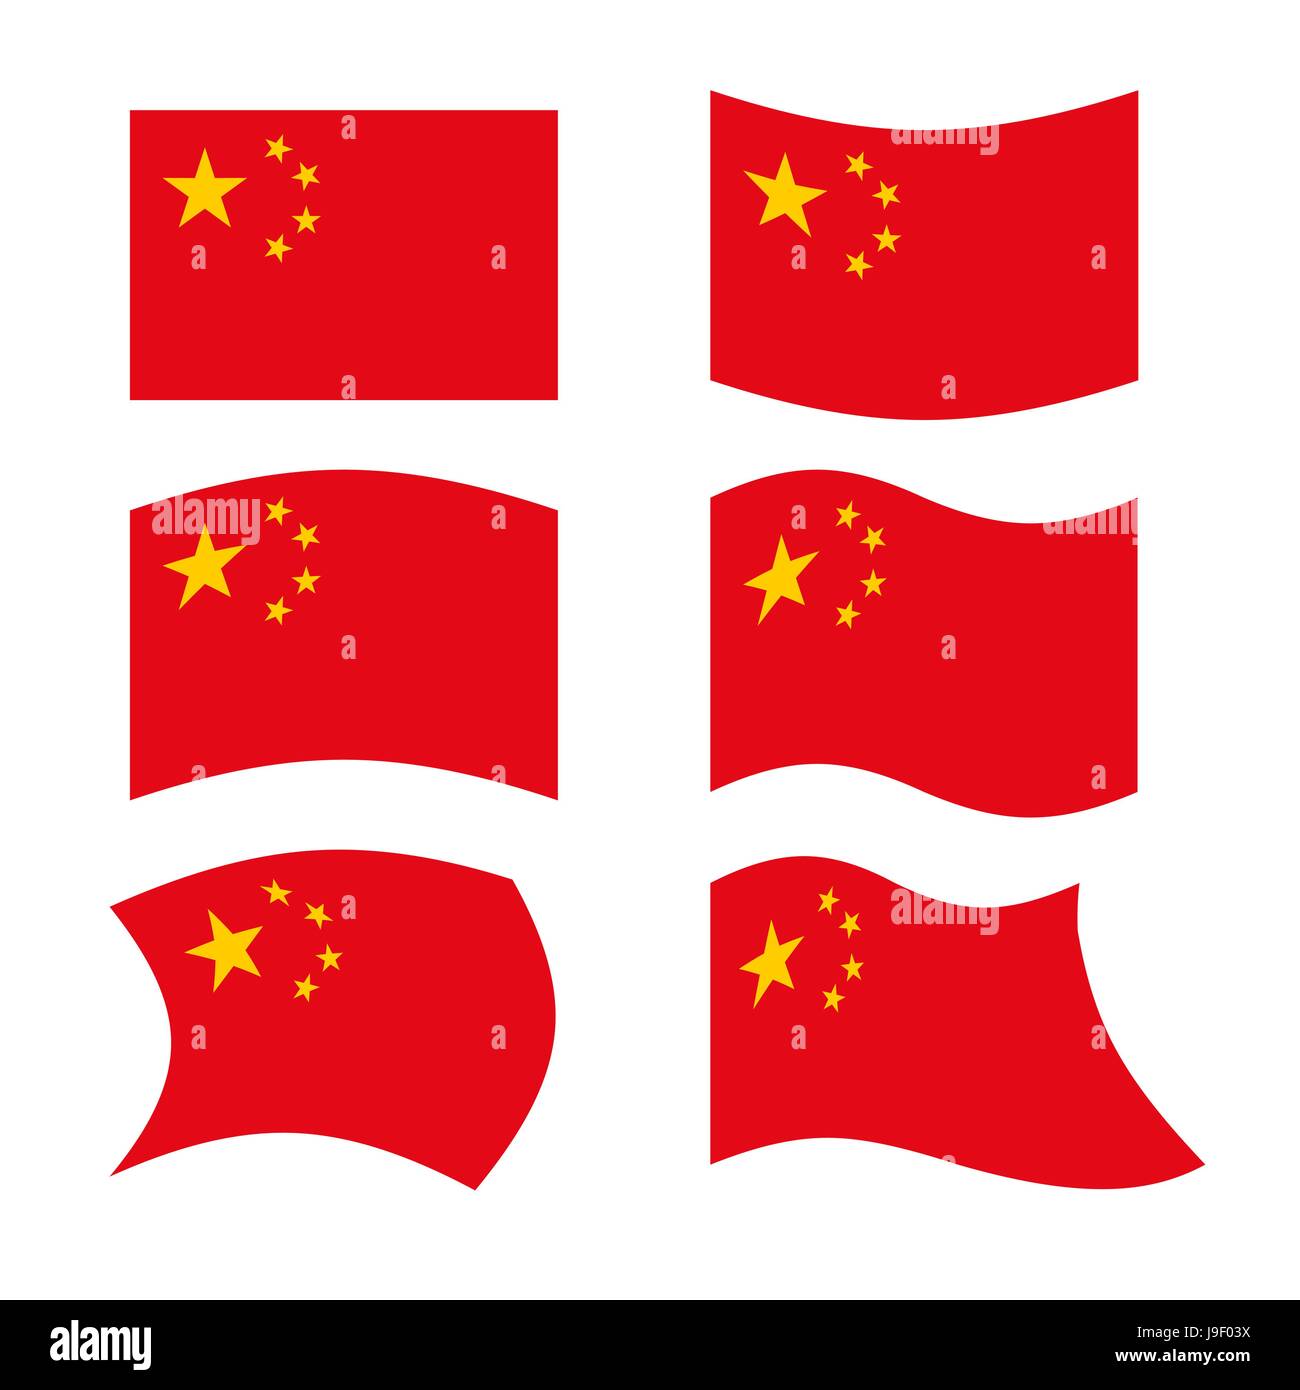 China-Flagge. Nationalflagge des chinesischen Staates festgelegt. Rote Fahne und "goldene Sterne" Stock Vektor